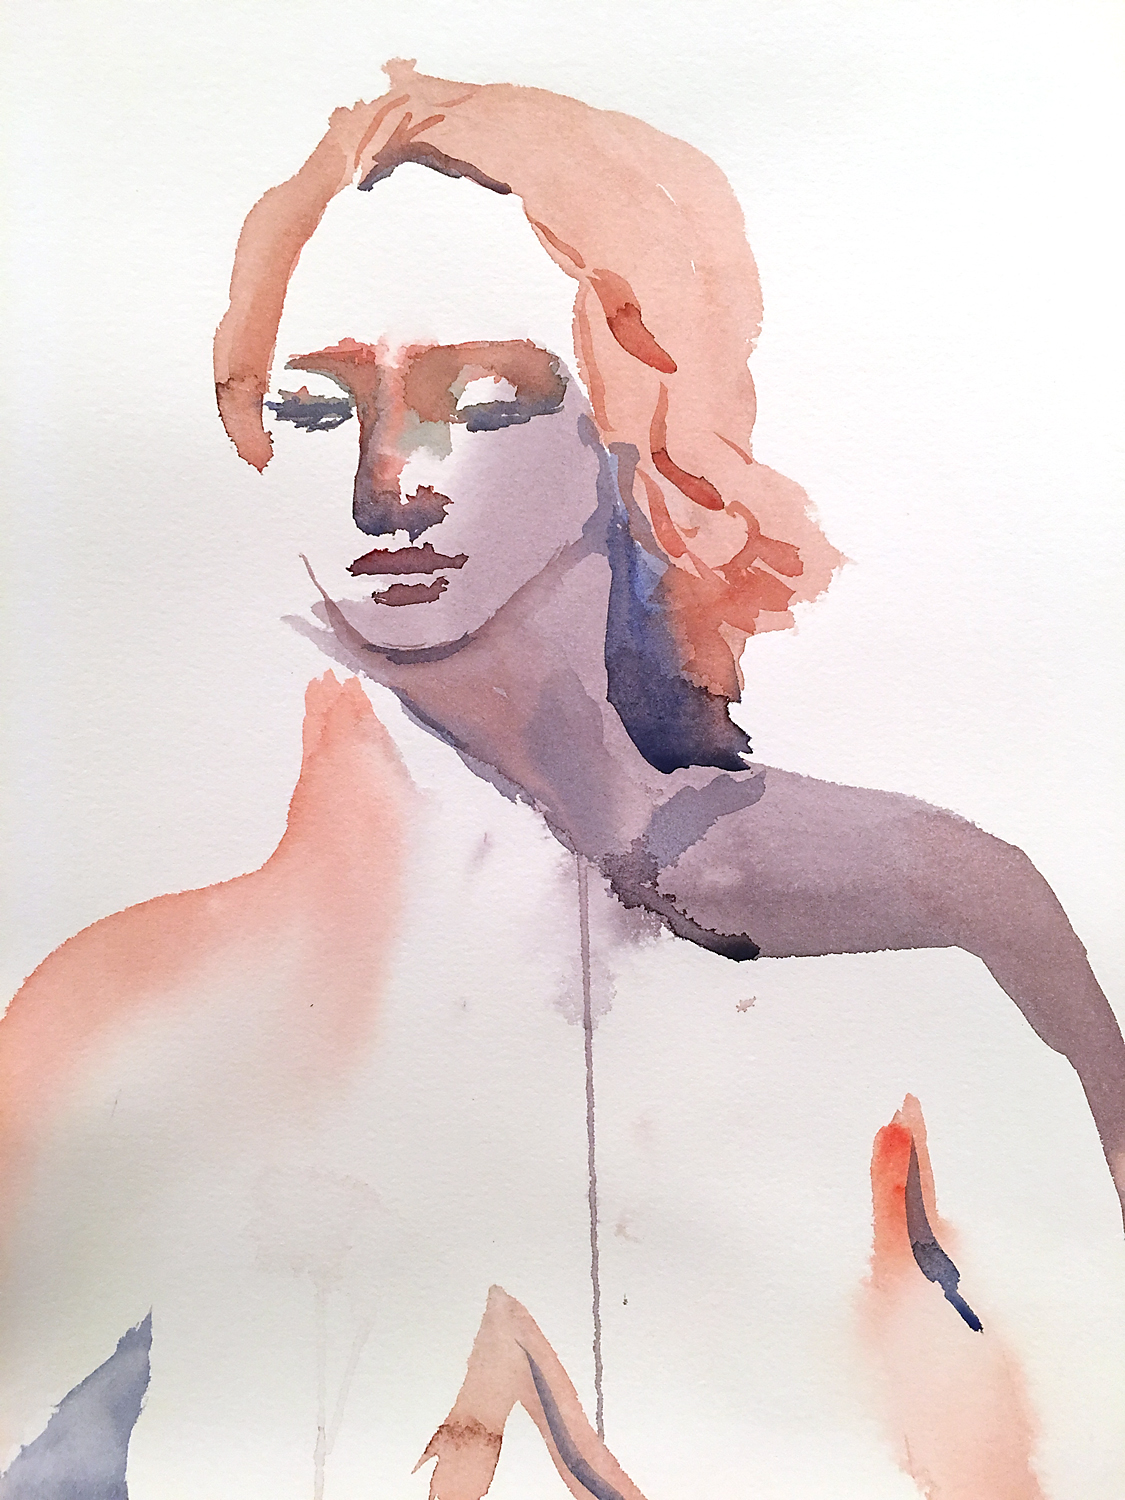 Helen-Watercolor-on-paper-by-Indira-Cesarine-001.jpg